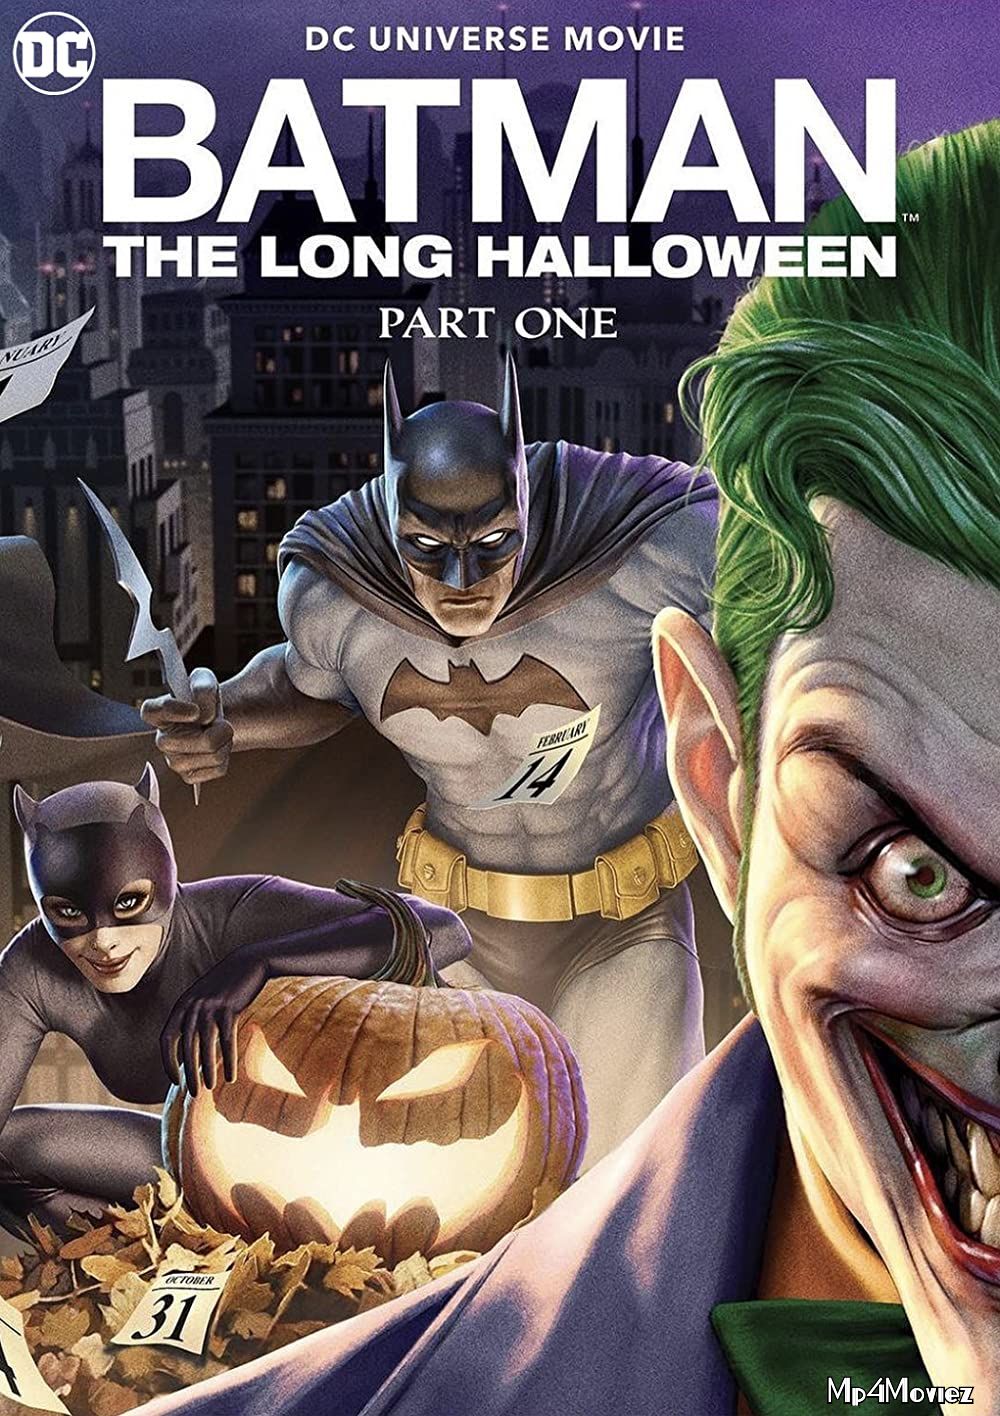 Batman The Long Halloween Part One (2021) English BRRip download full movie